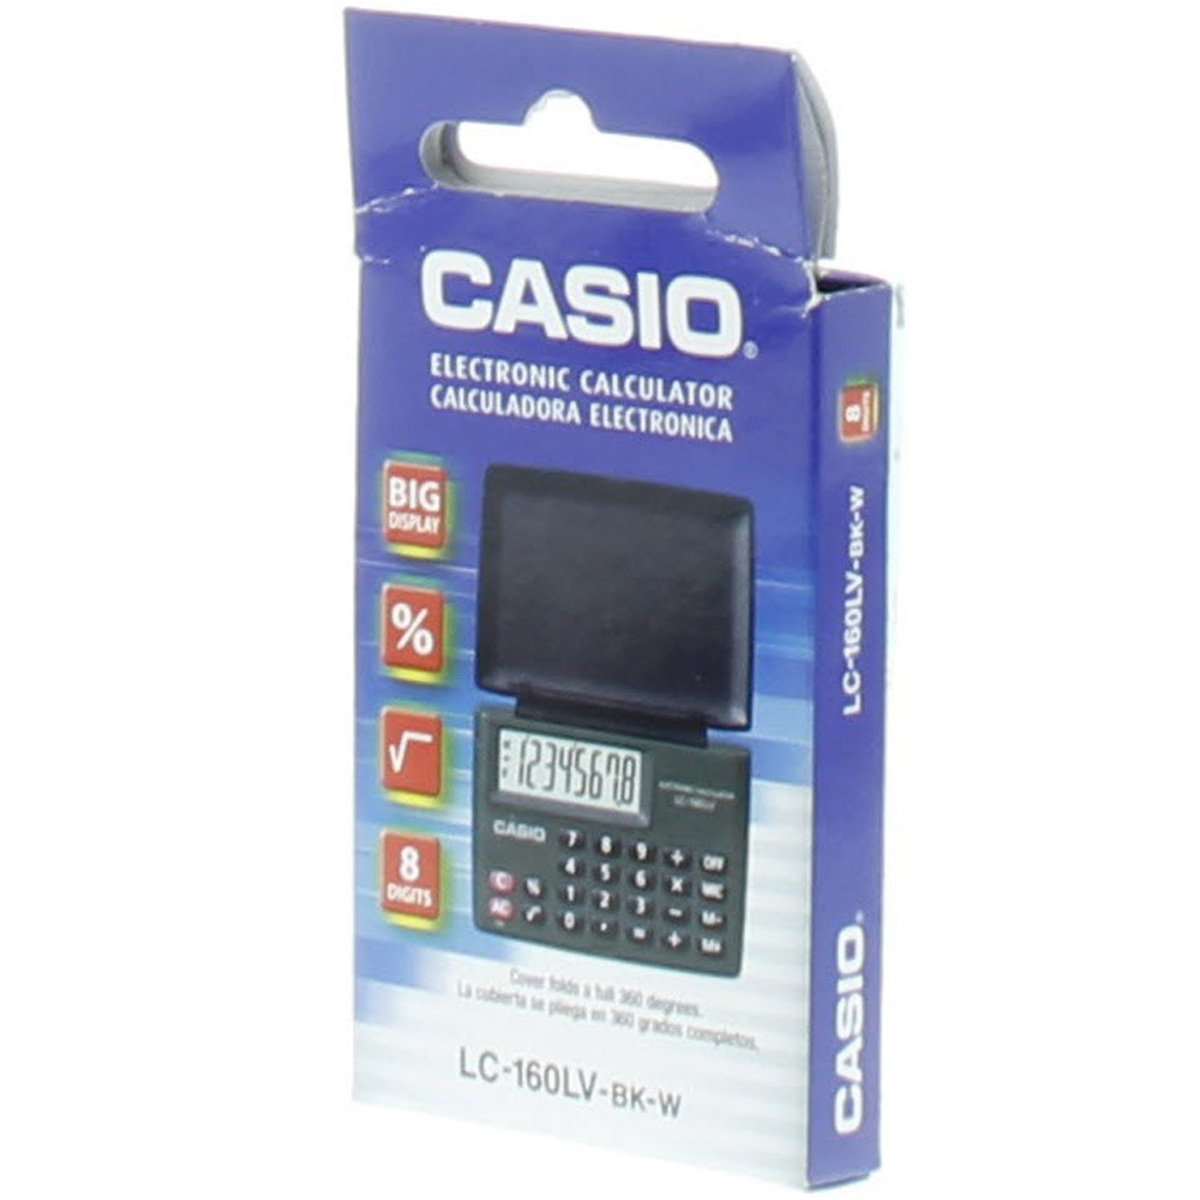 Casio Electronic Calculator LC-160LV